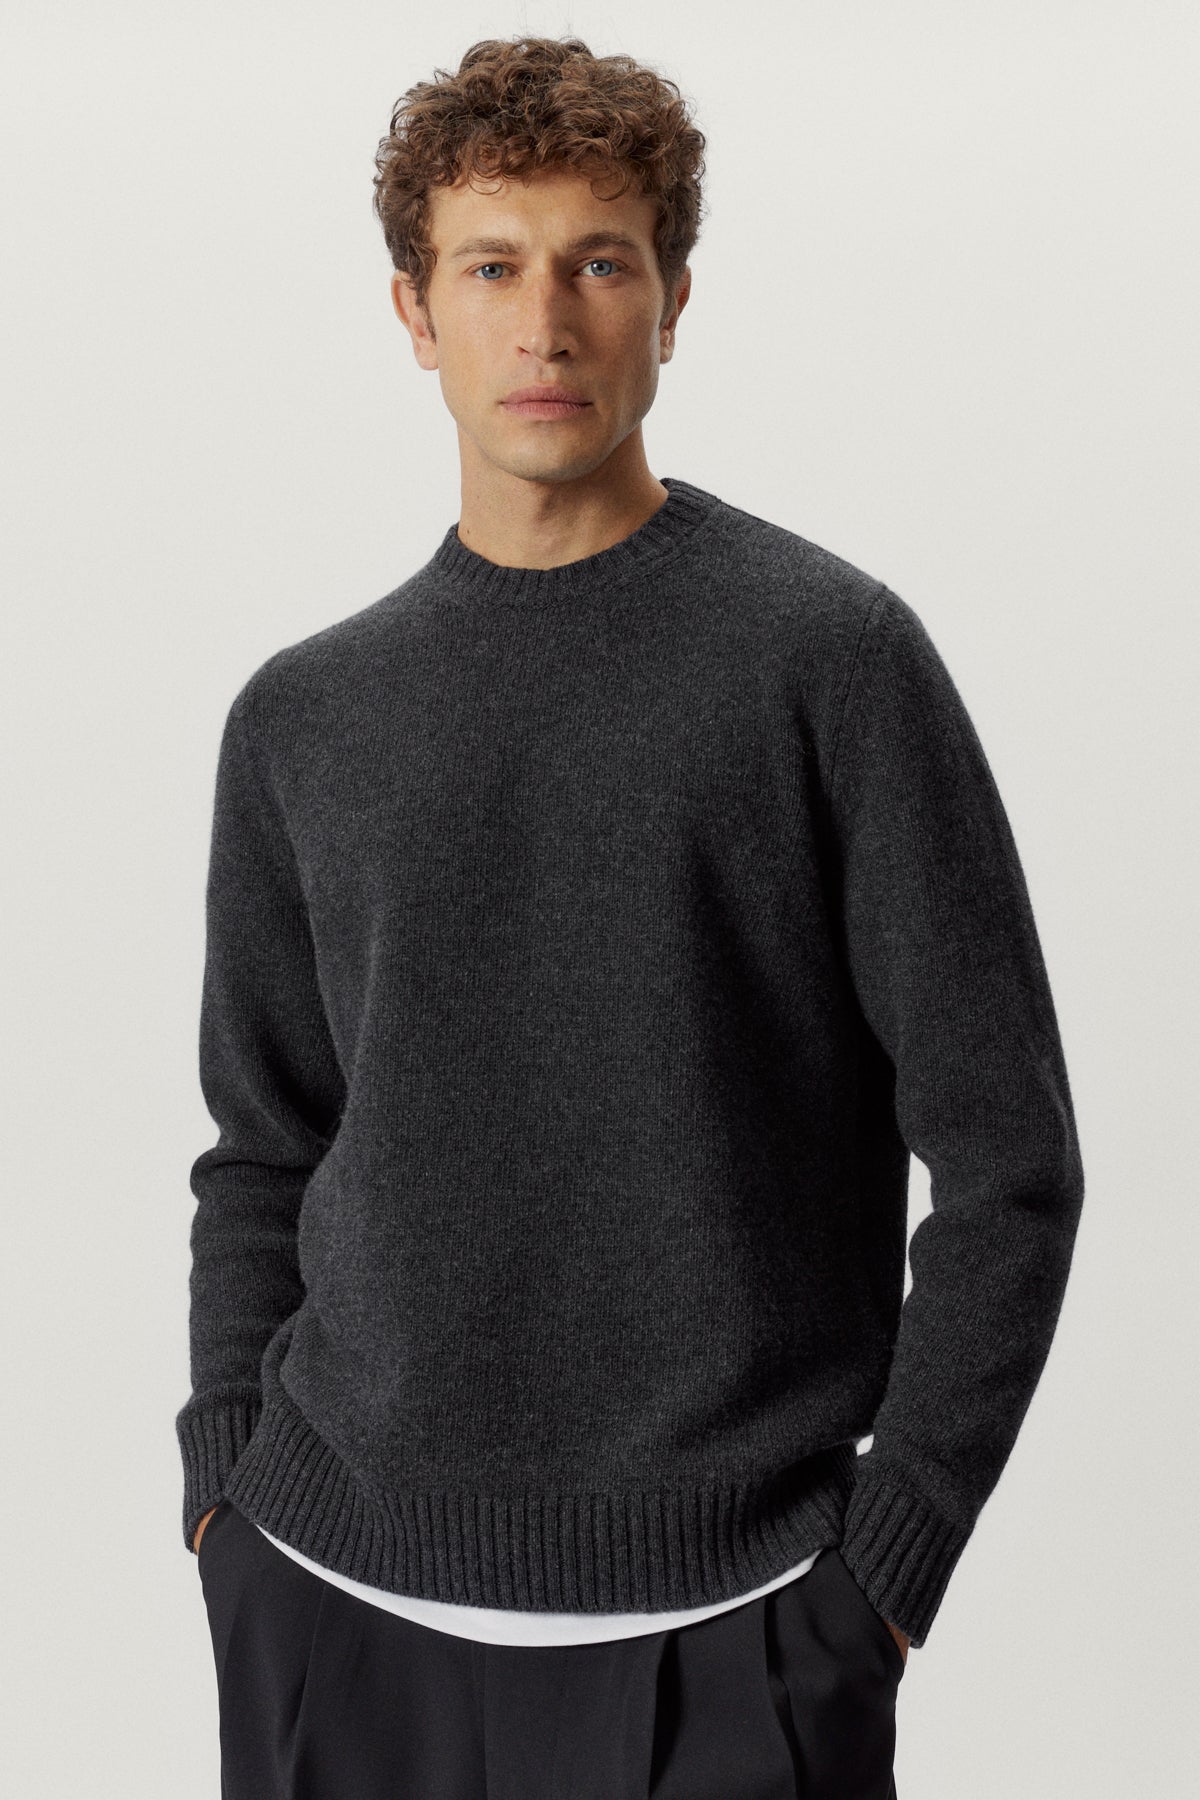 the woolen sweater ash grey